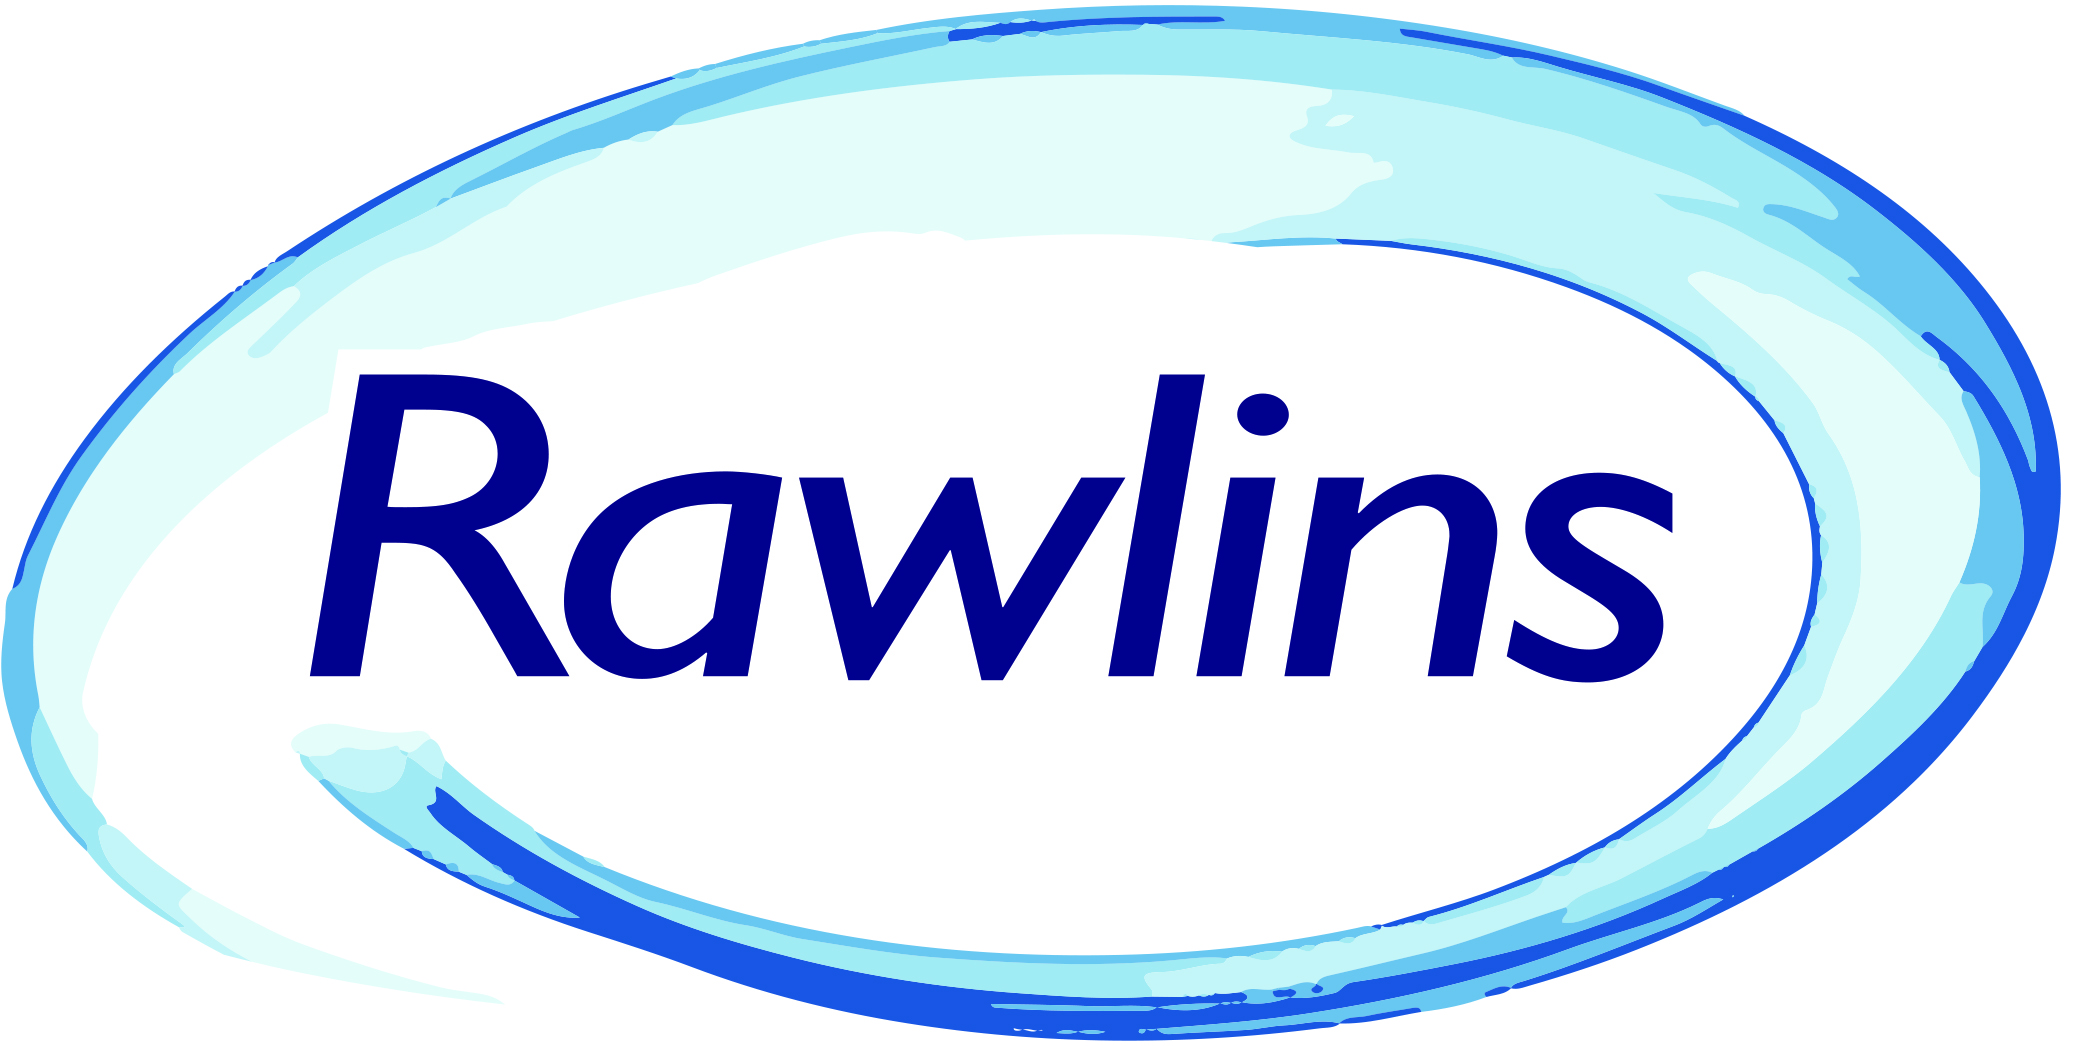 Denis Rawlins Ltd.